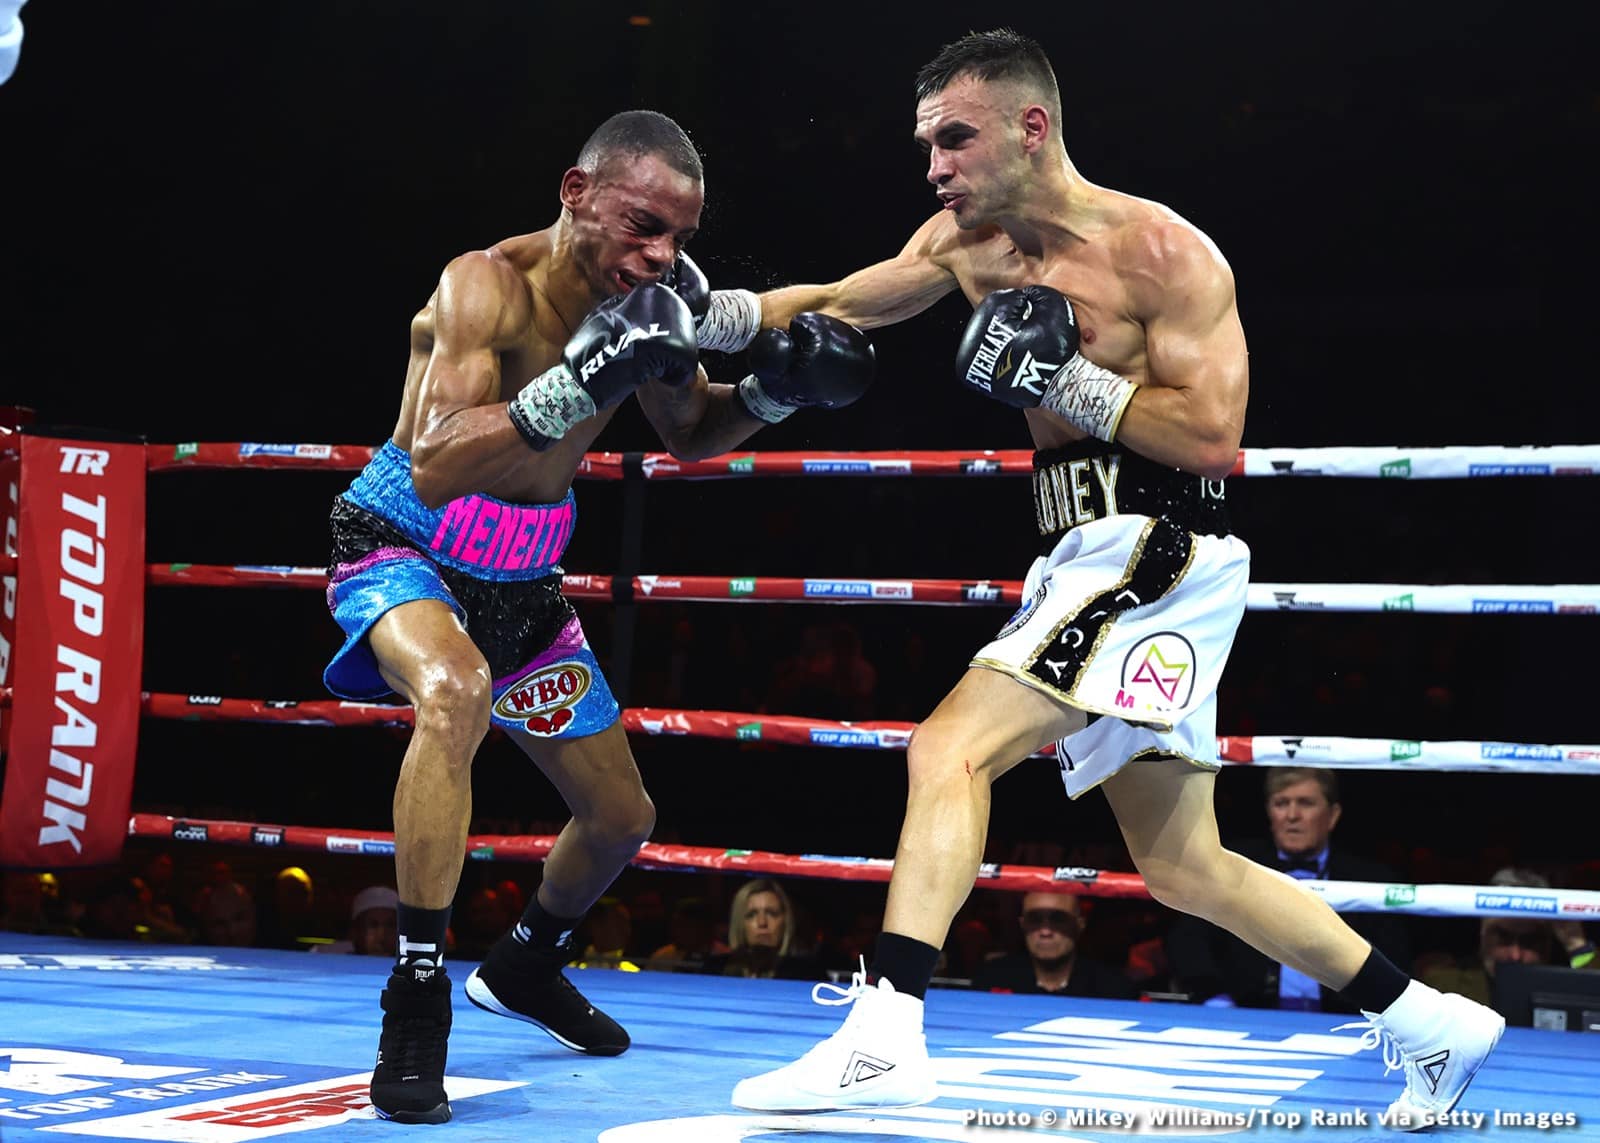 Image: Boxing Results: Devin “The Dream” Haney Defeats Kambosos, Jr.!